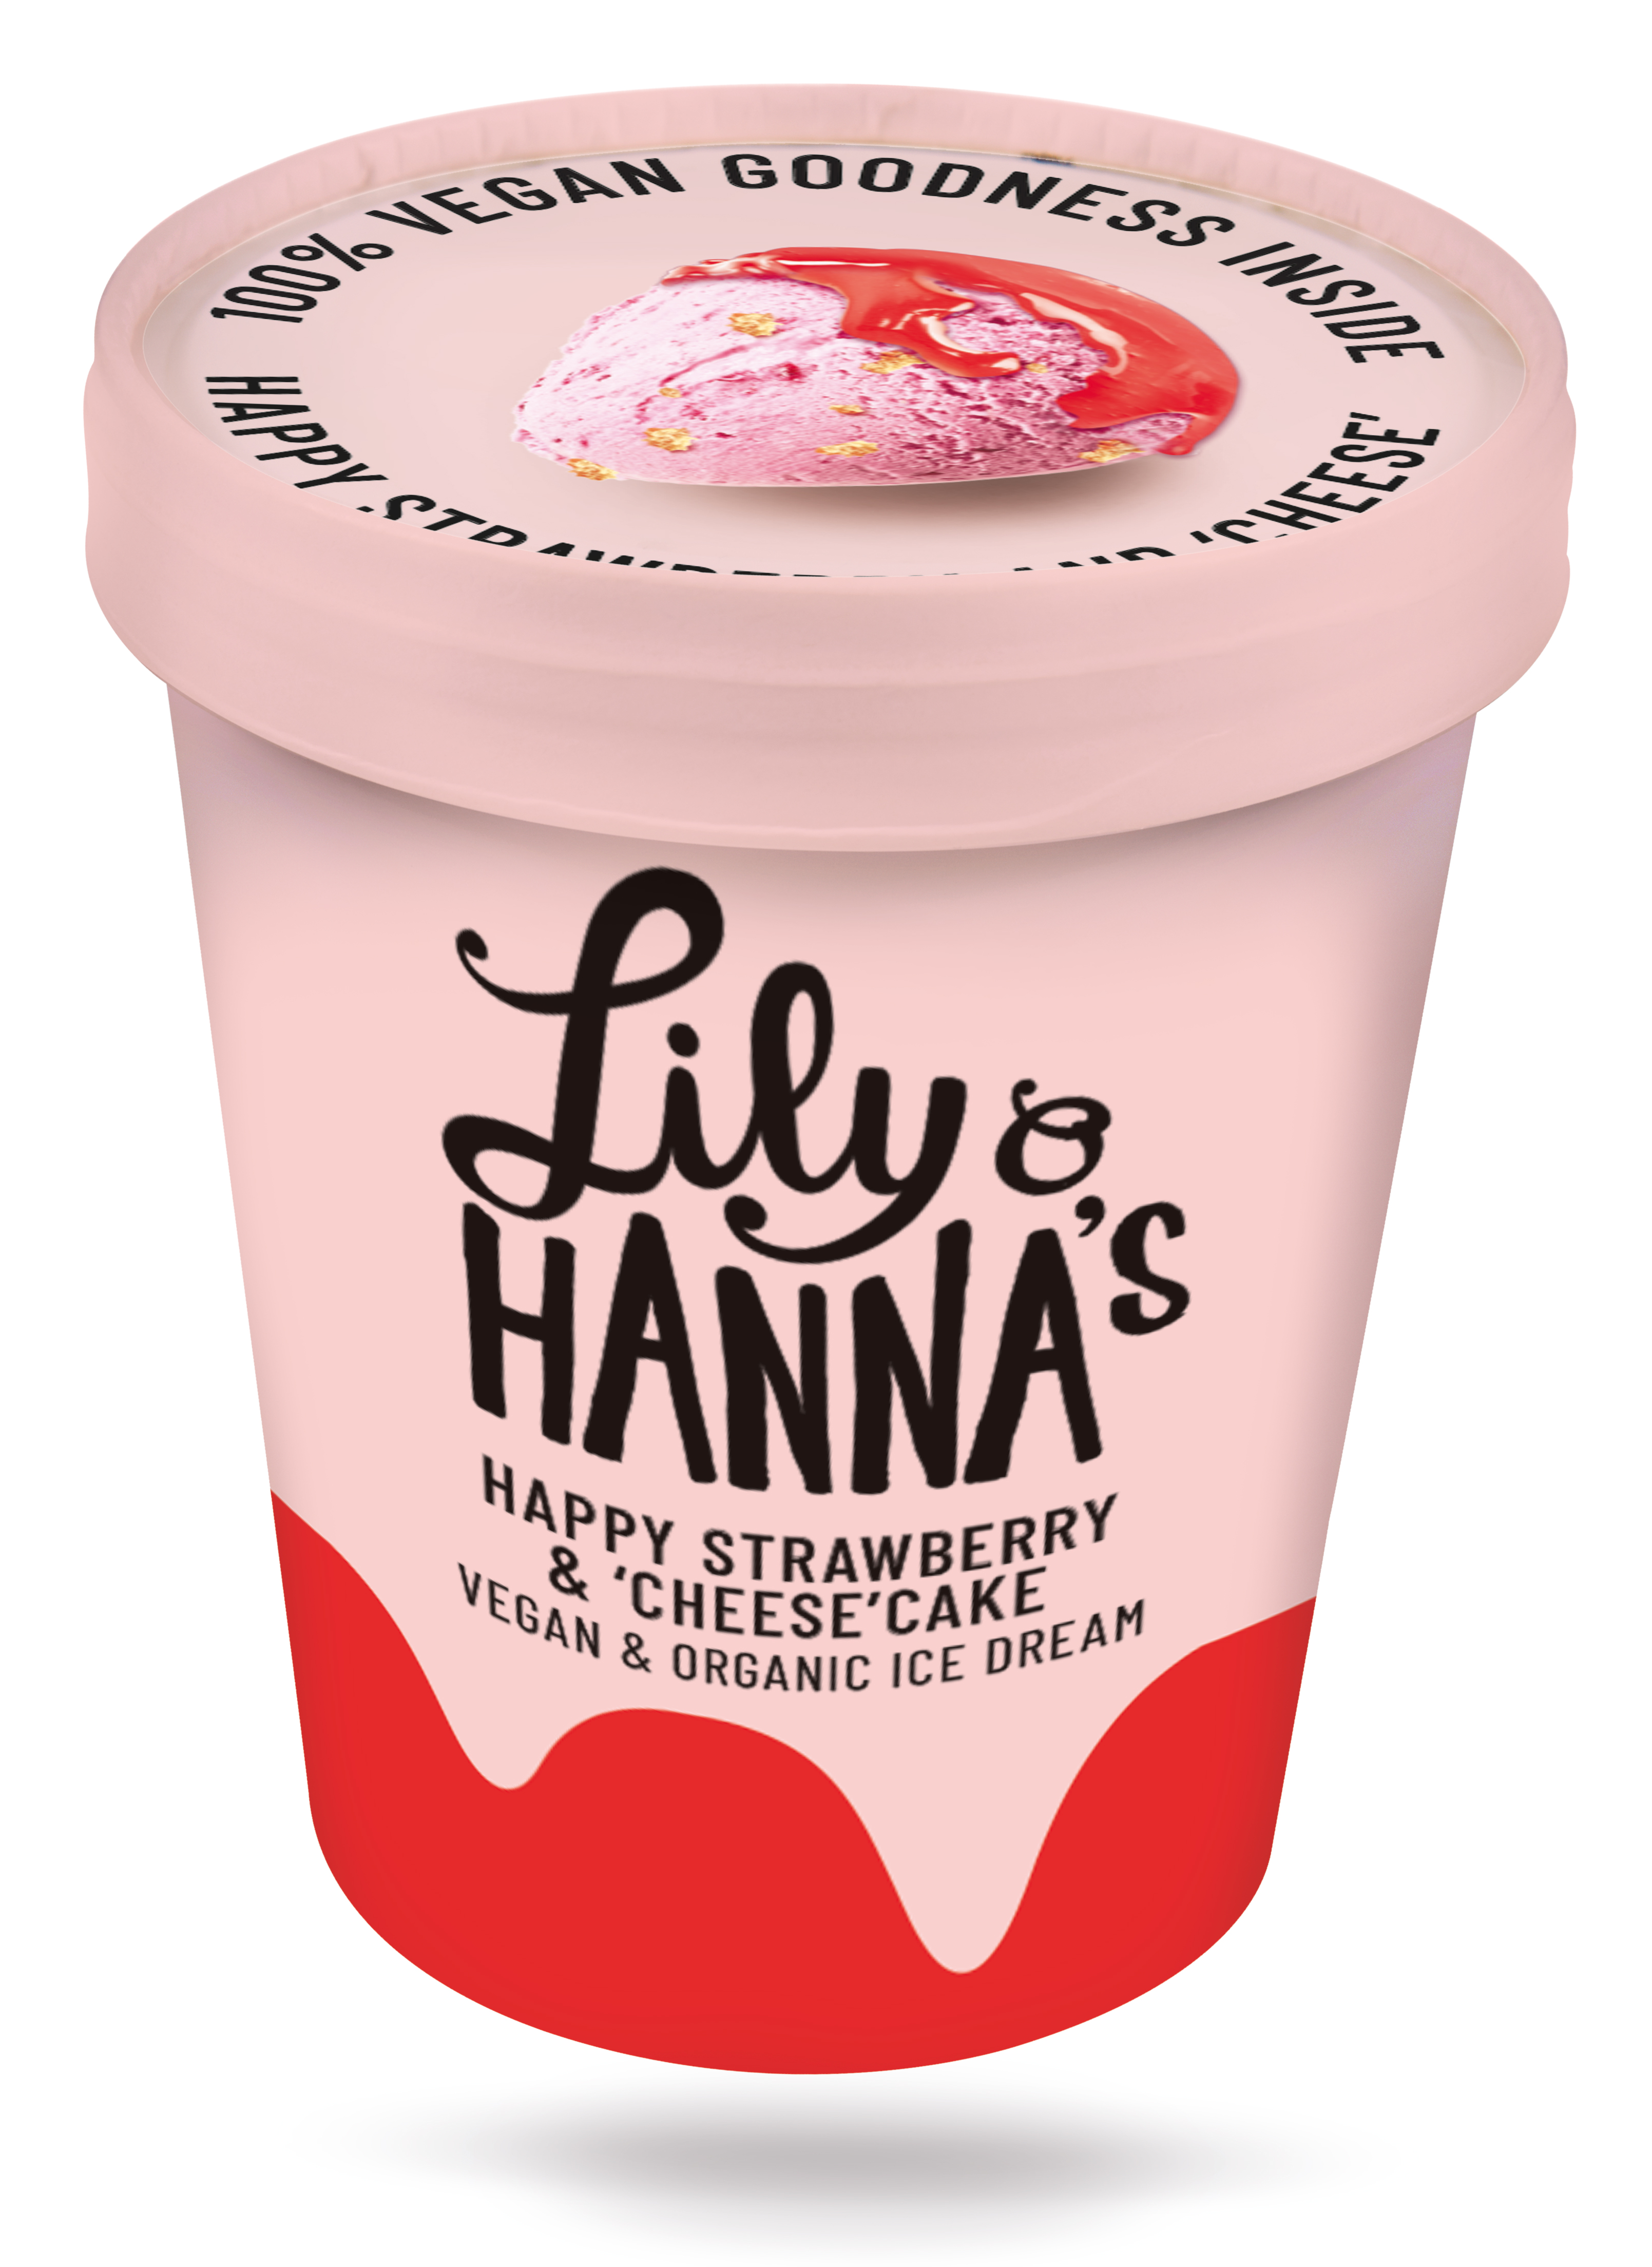 Lily & Hanna's Happy strawberries & cheesecake bio & raw 465ml